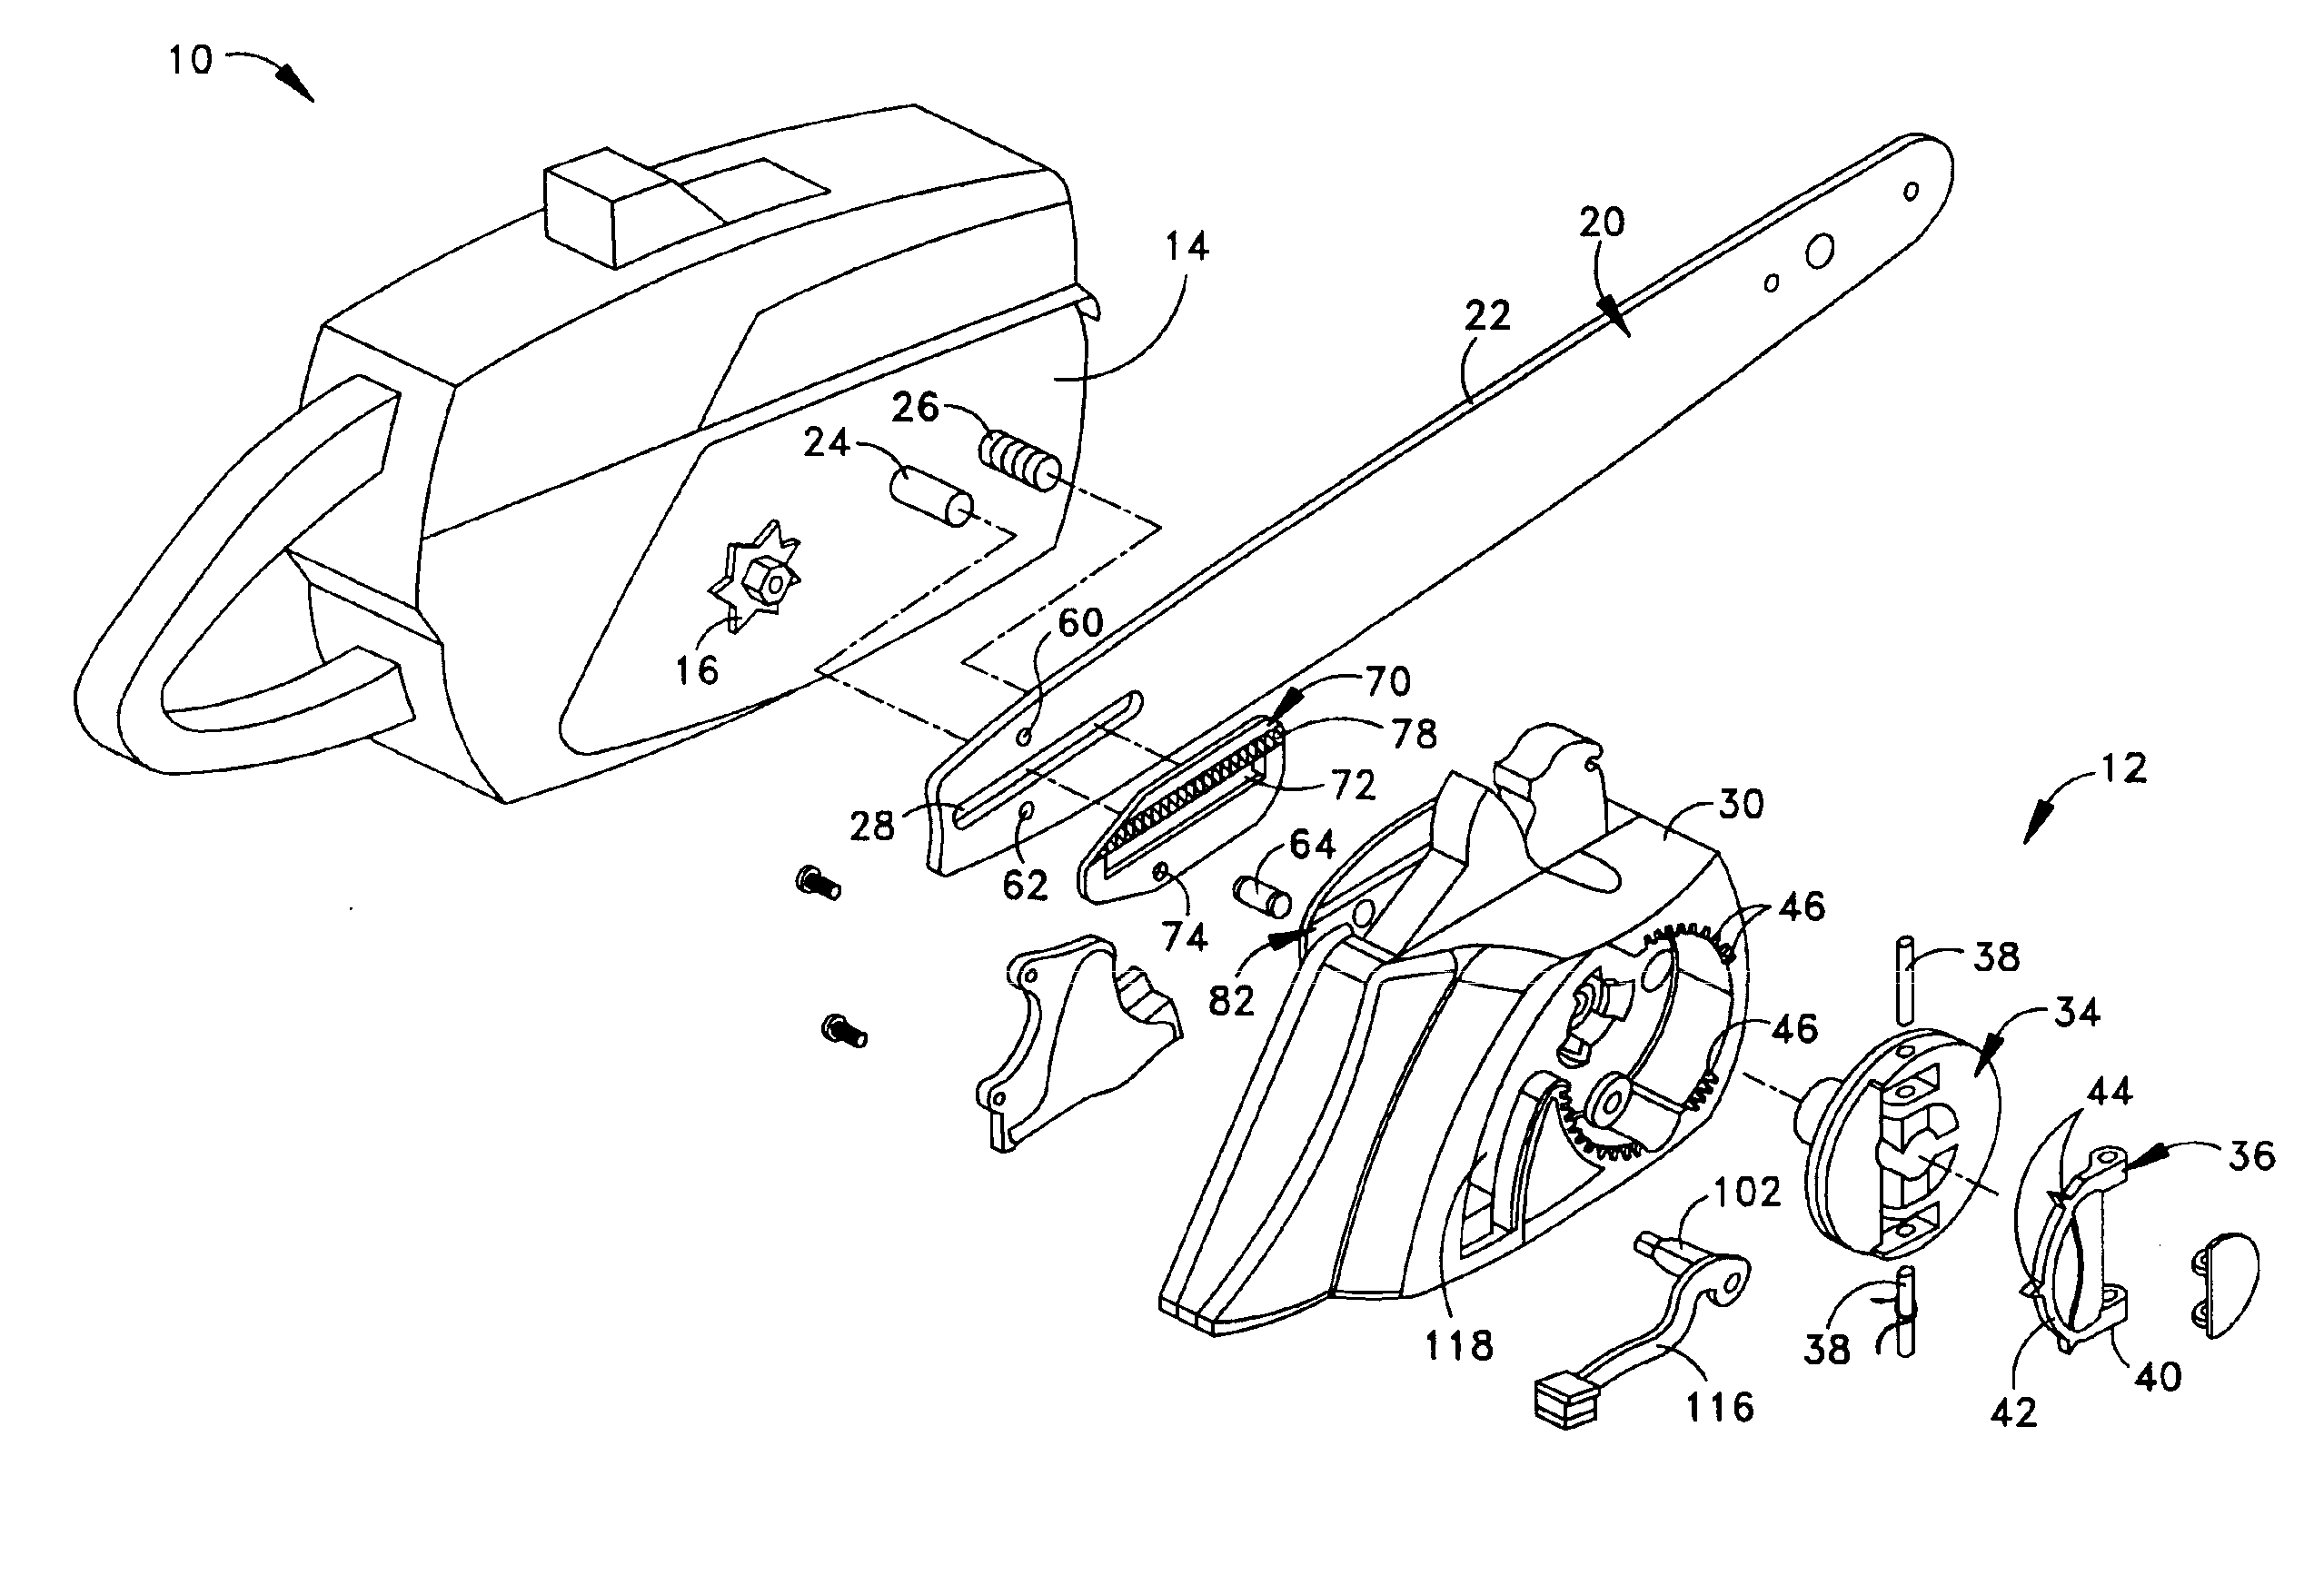 Chain saw adjuster mechanism with locking teeth